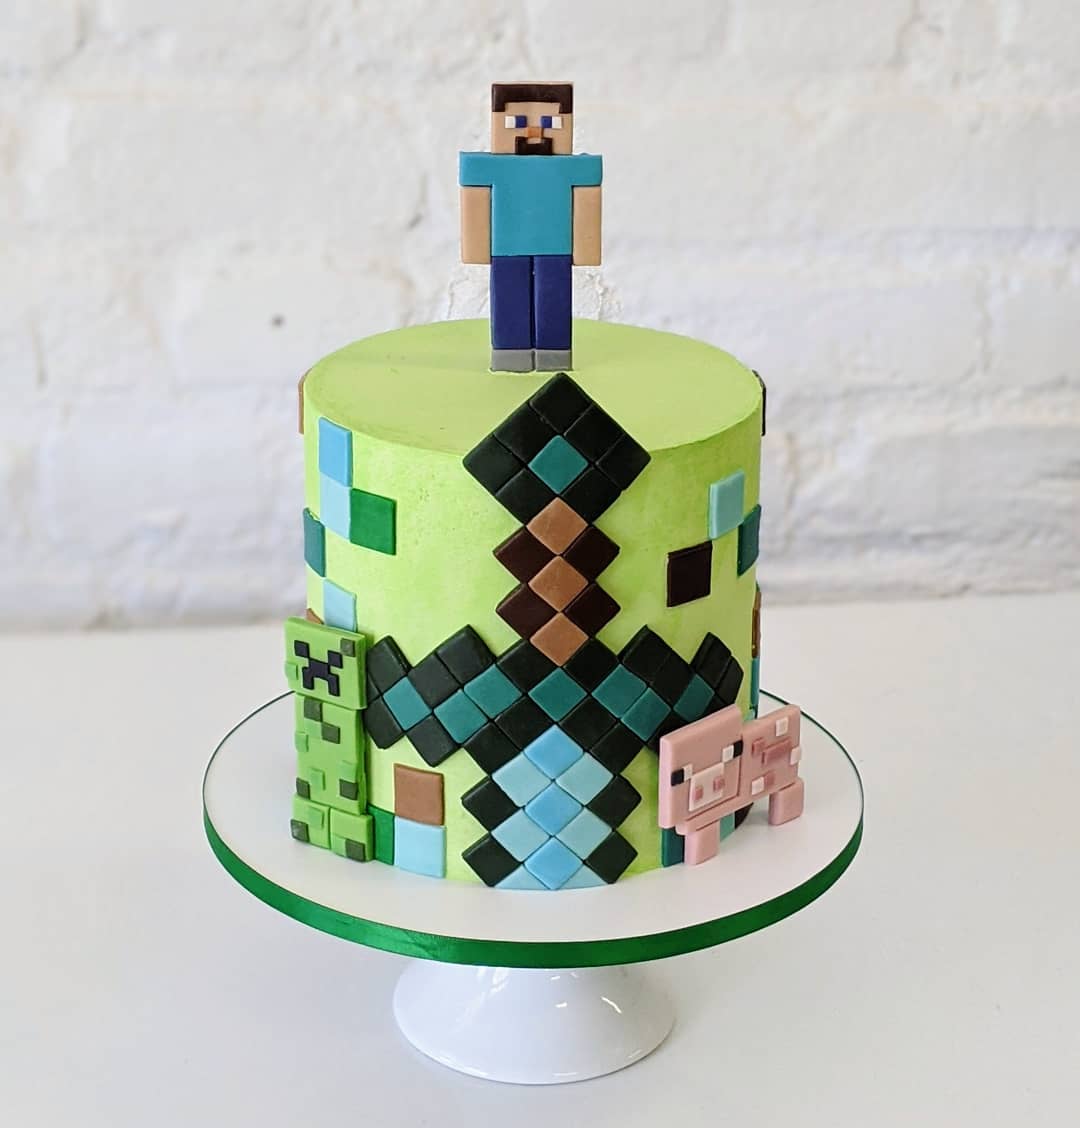 Customized Minecraft theme birthday cake by bakisto - the cake company